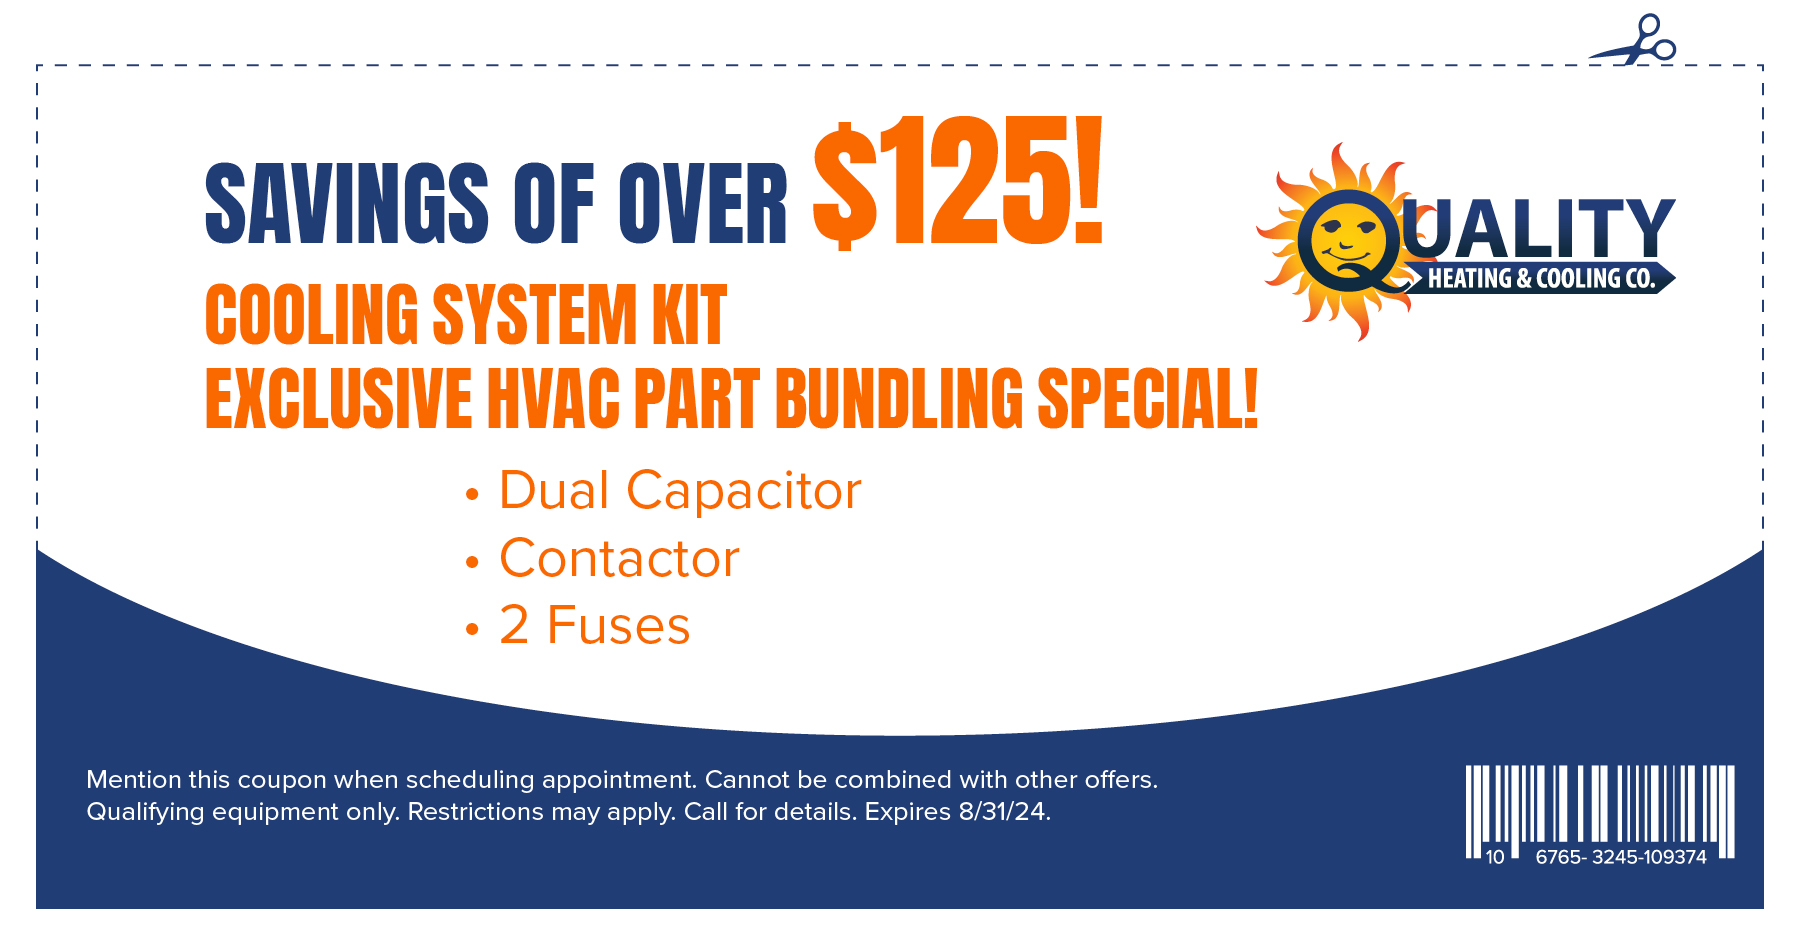 Savings of over $125. Cooling system kit. Exclusive HVAC part bundling special.